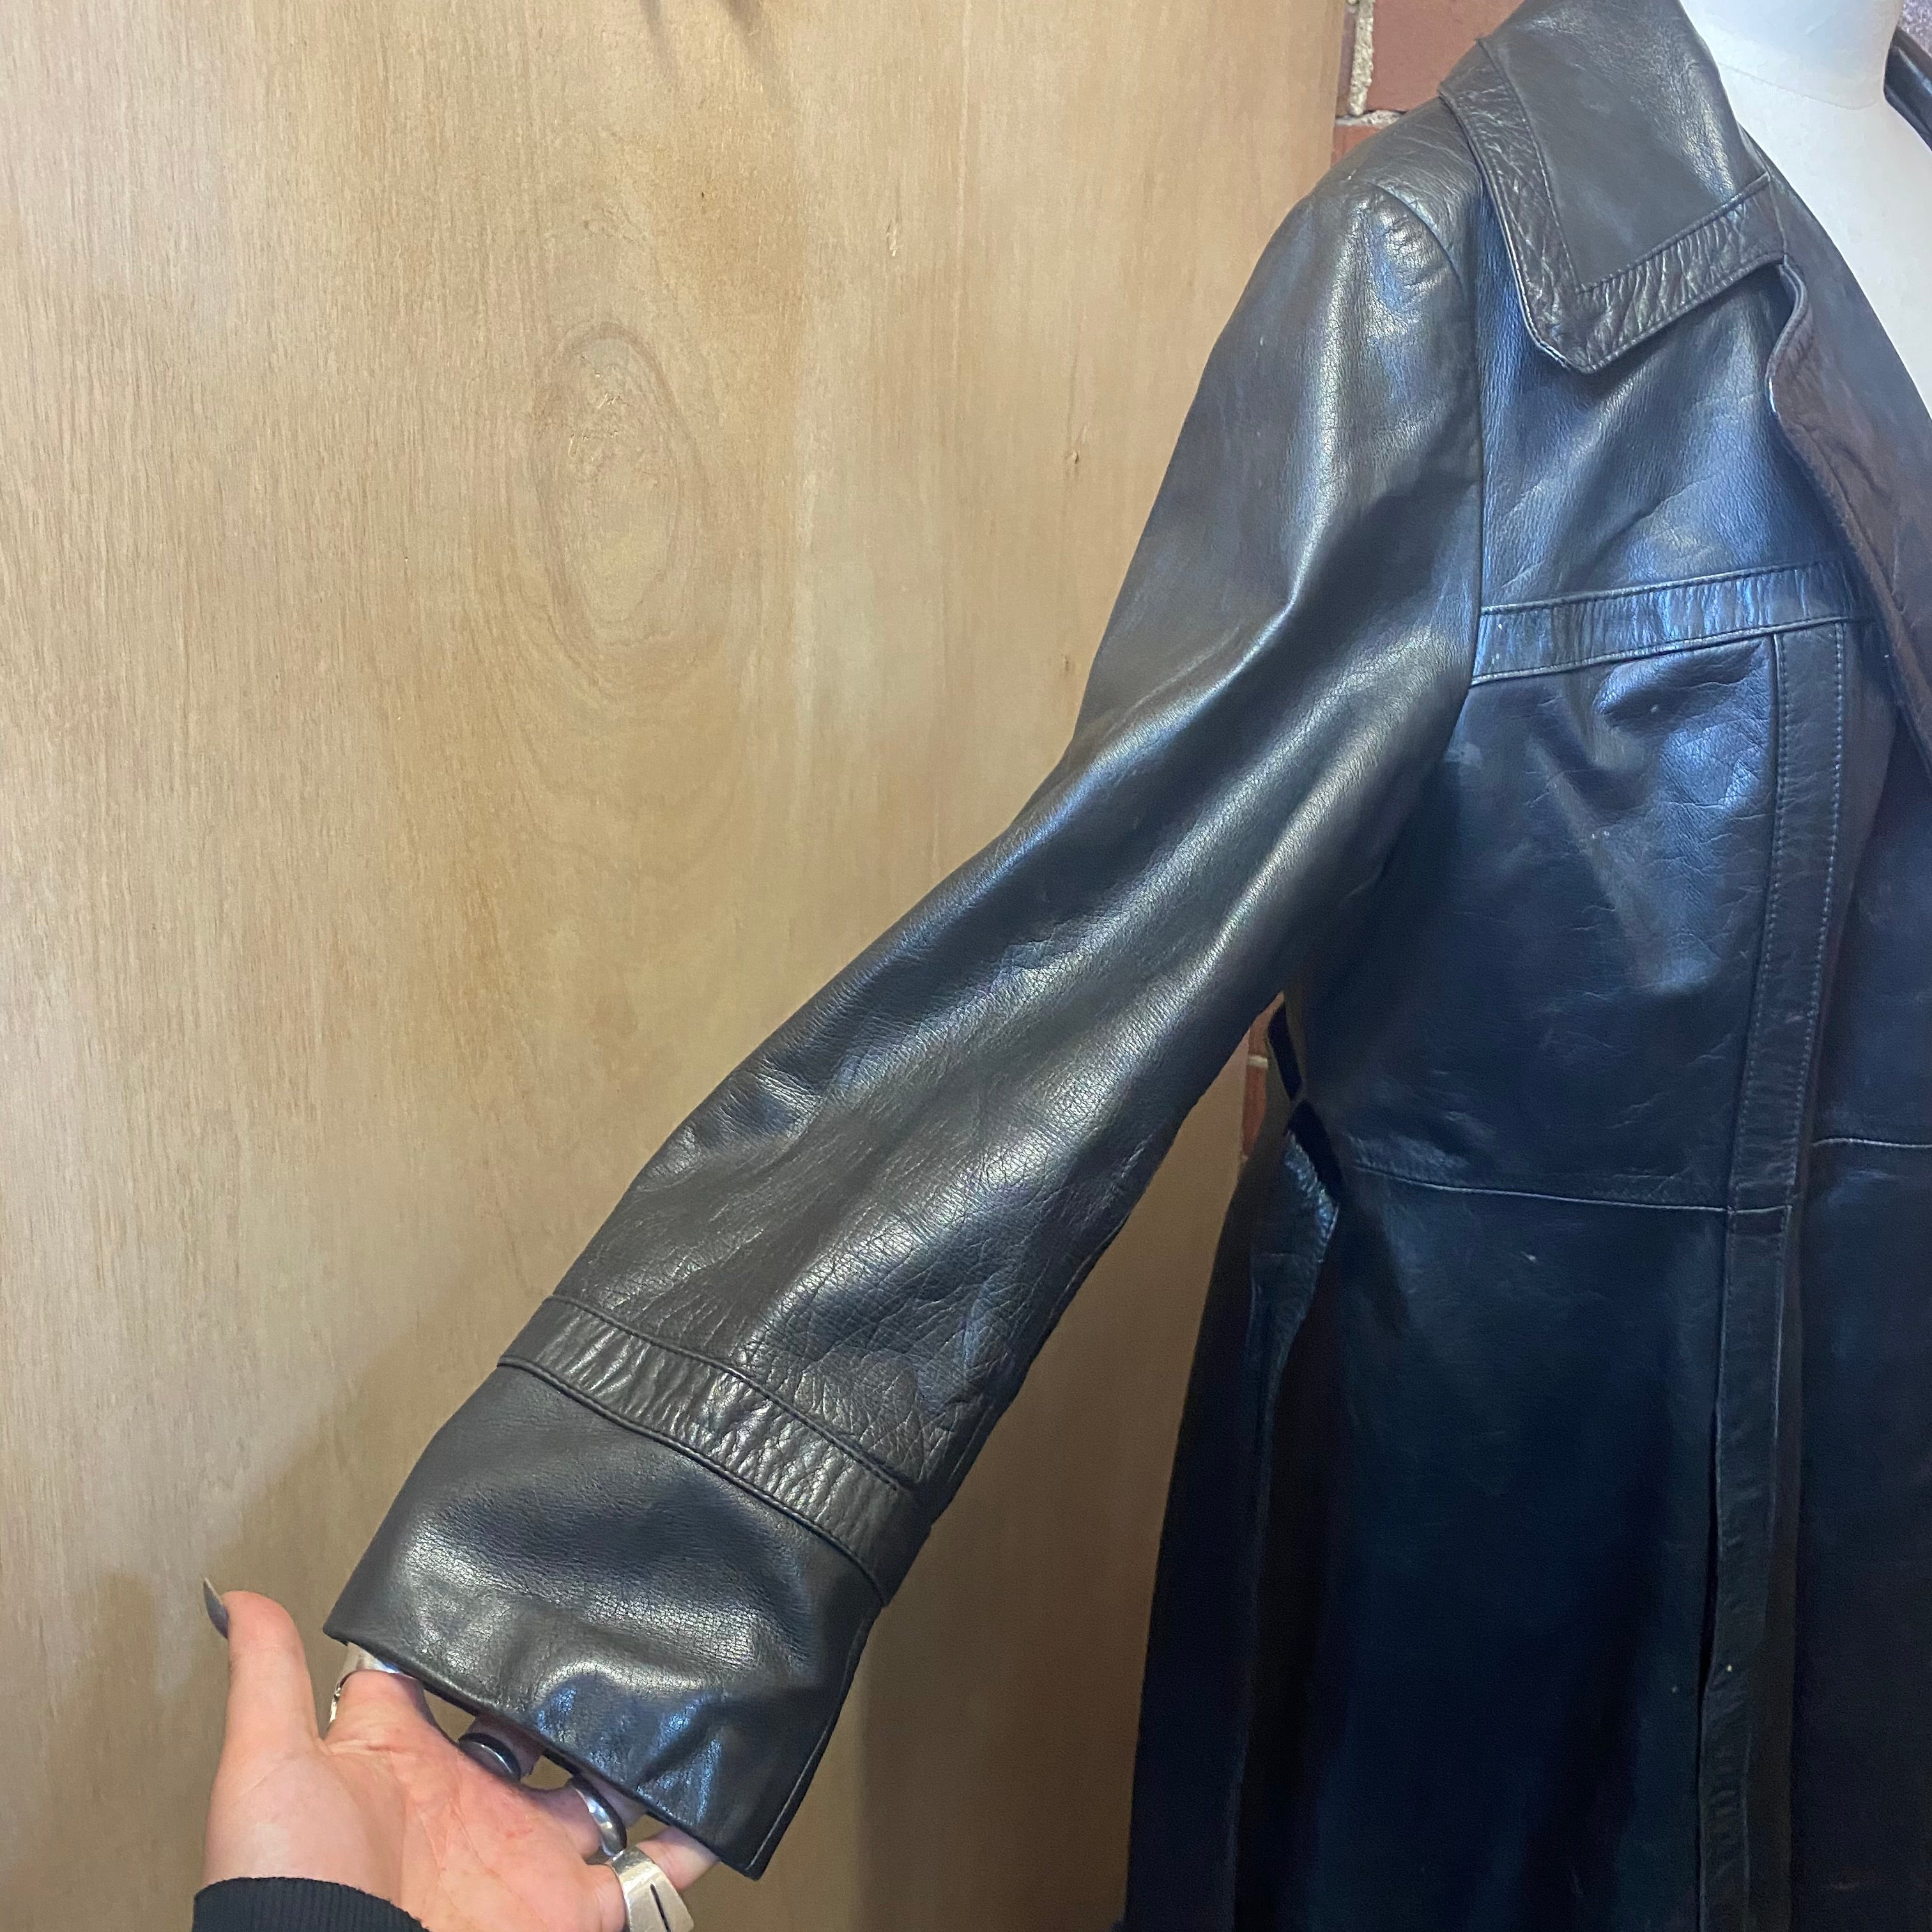 1990's long leather coat